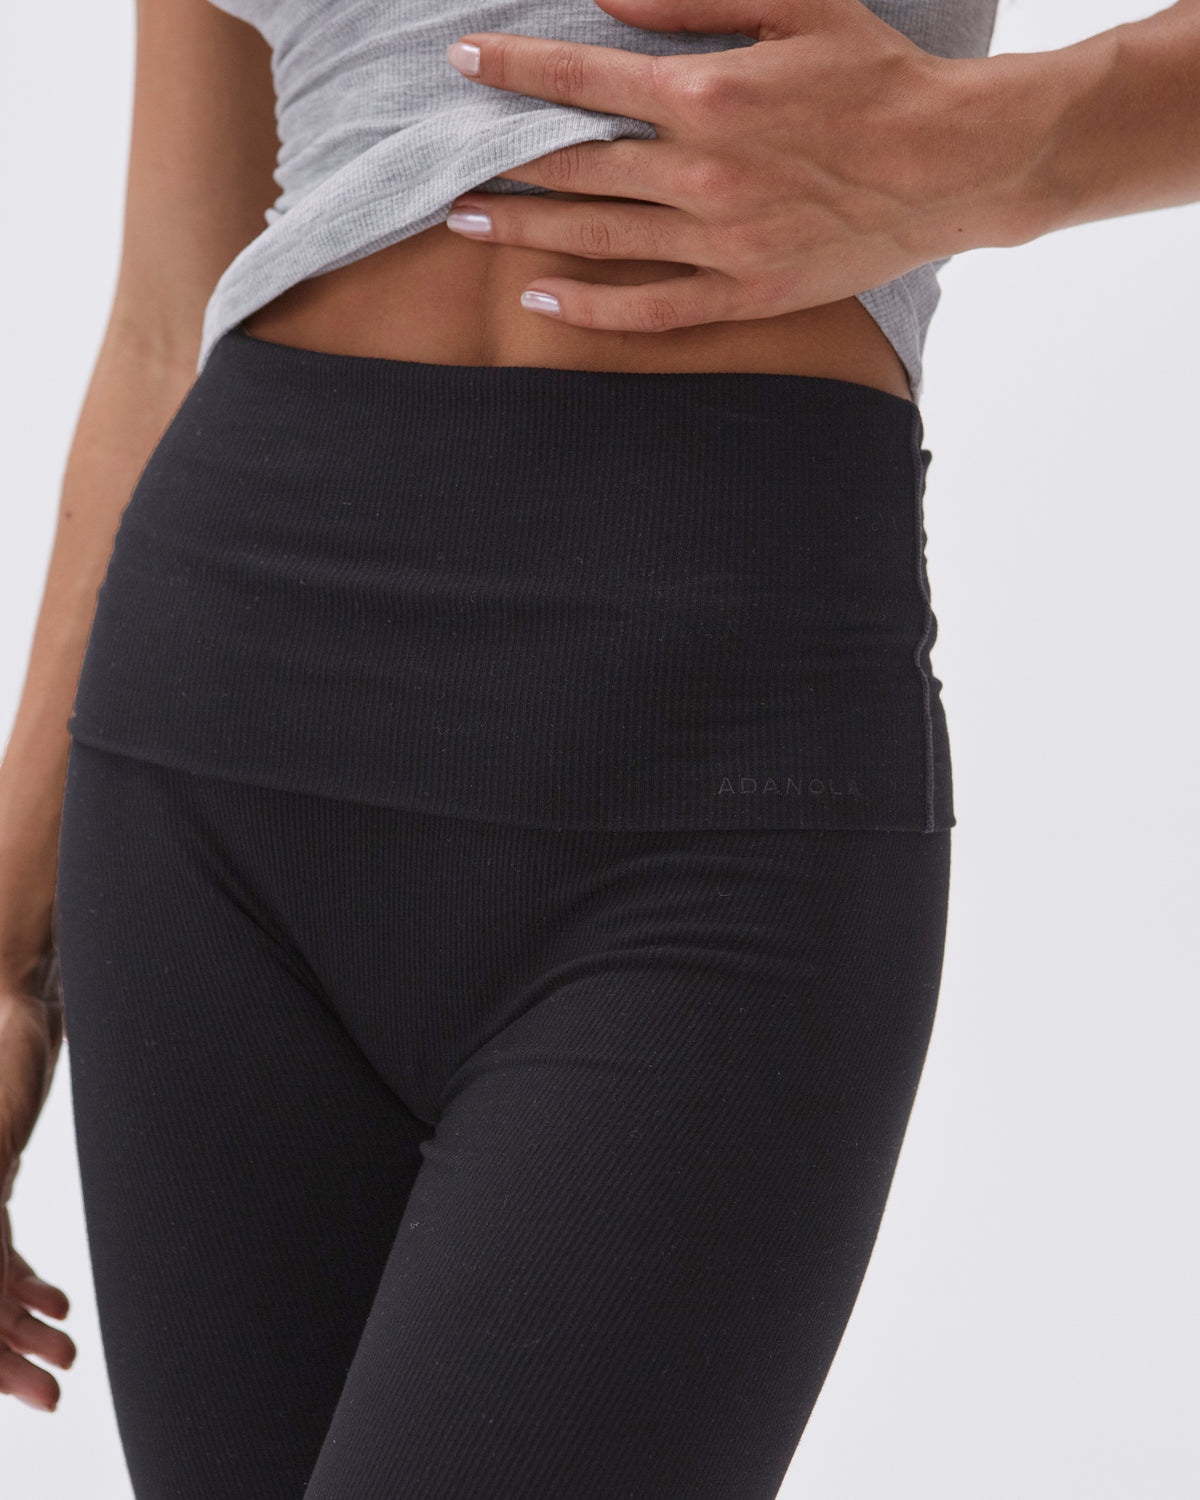 Foldover Yoga Pants – Napoleon Wear